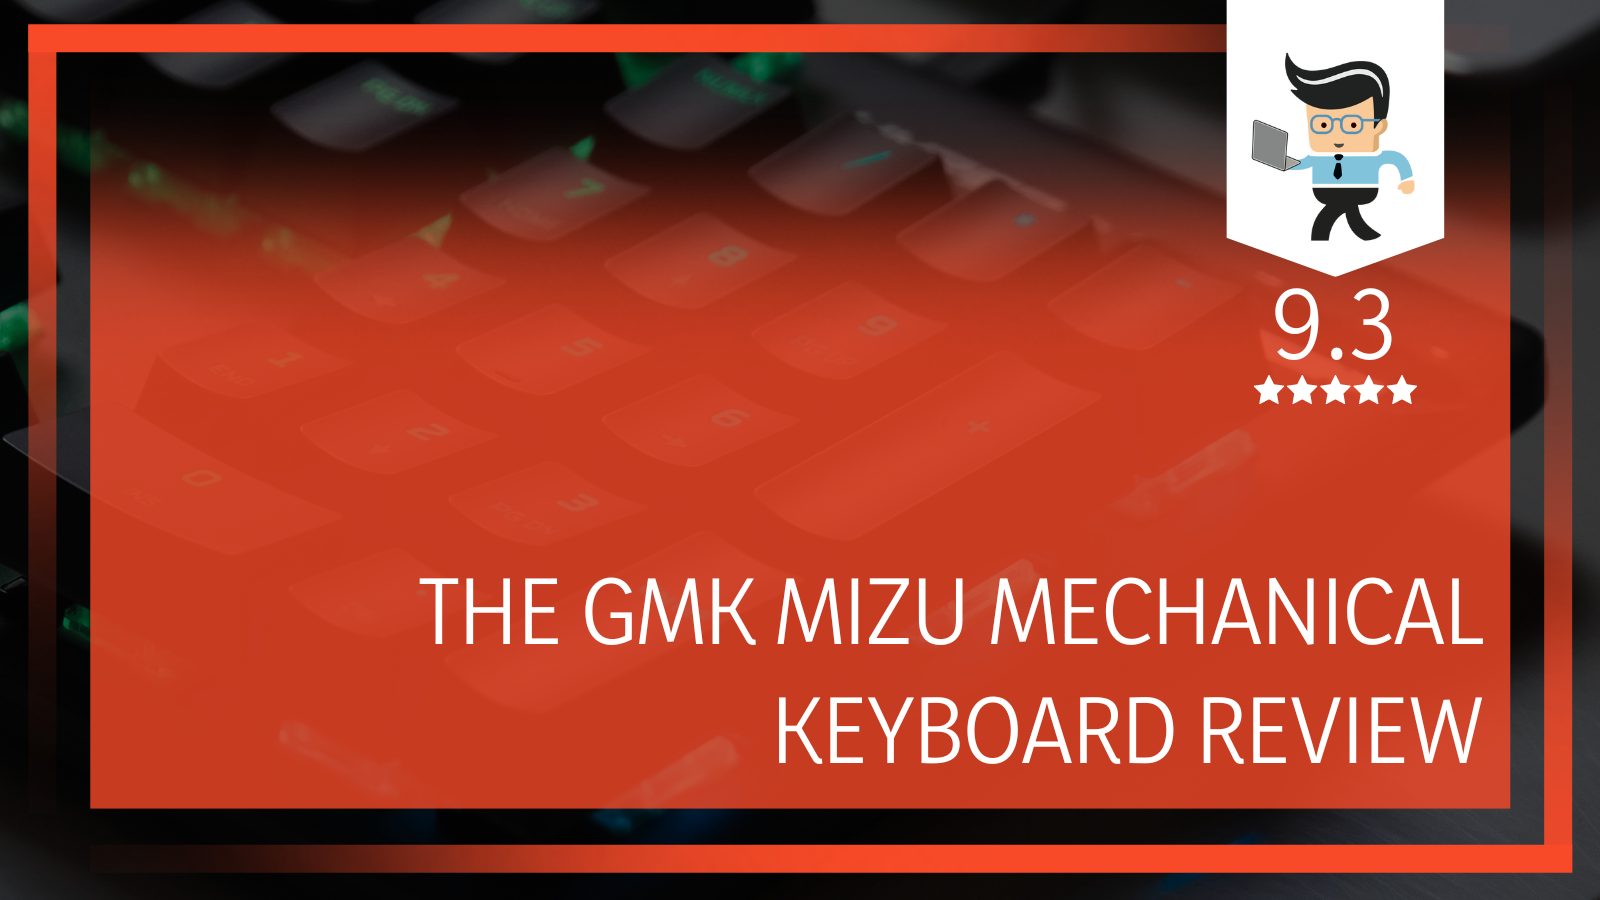 The GMK Mizu Mechanical Keyboard